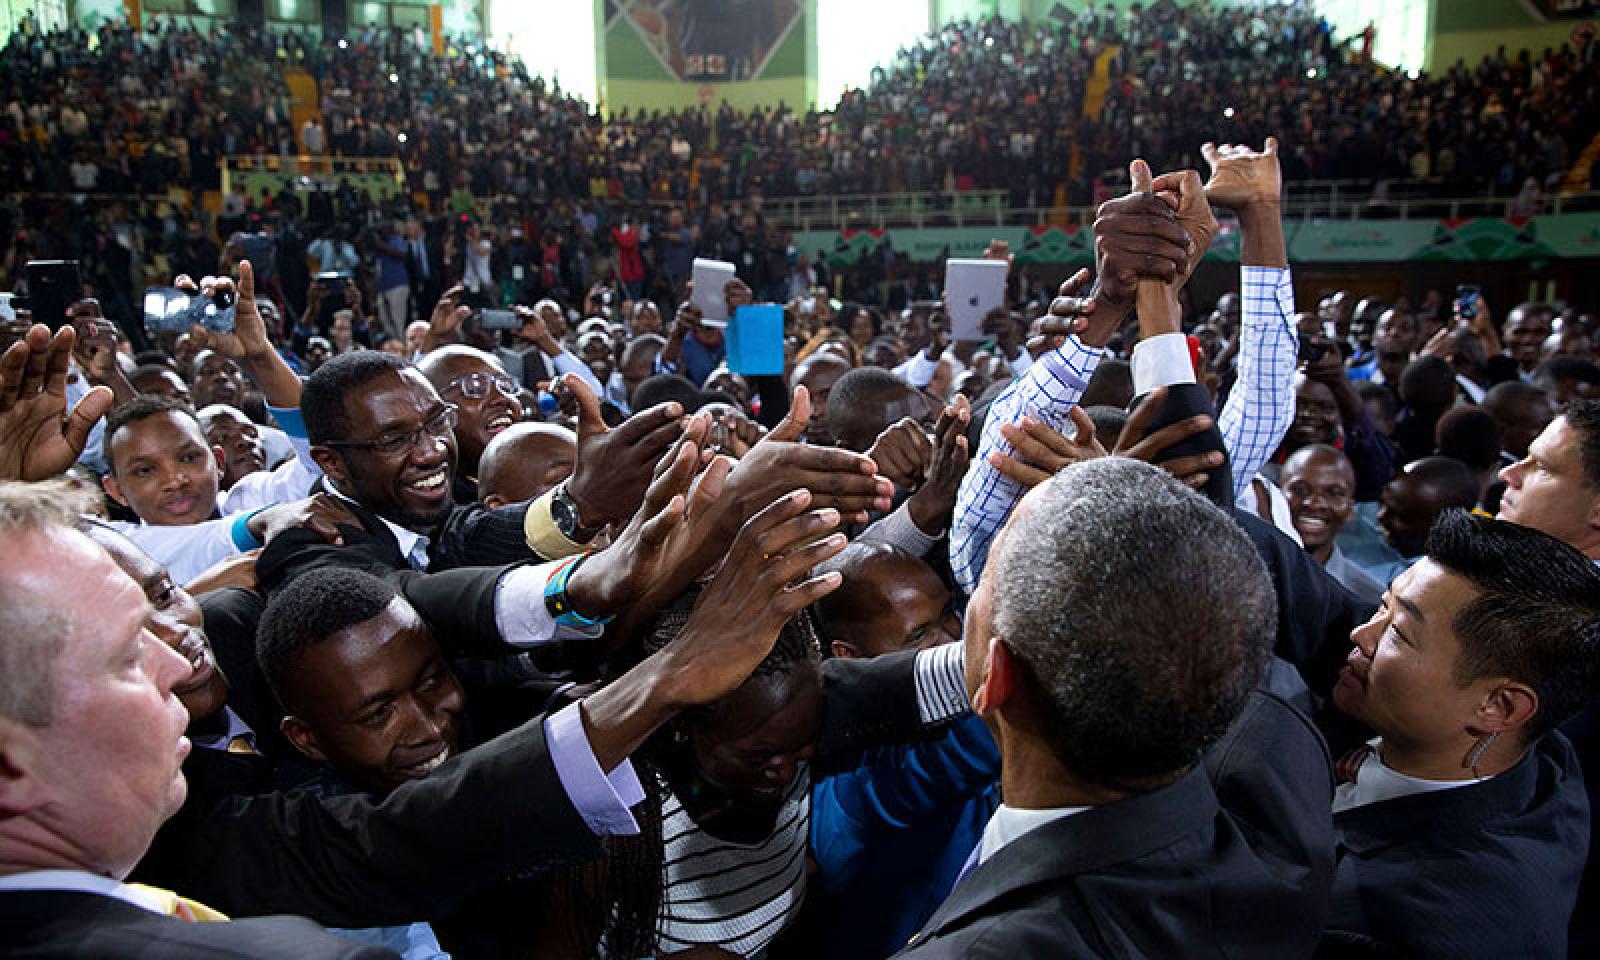 Obama in crowd